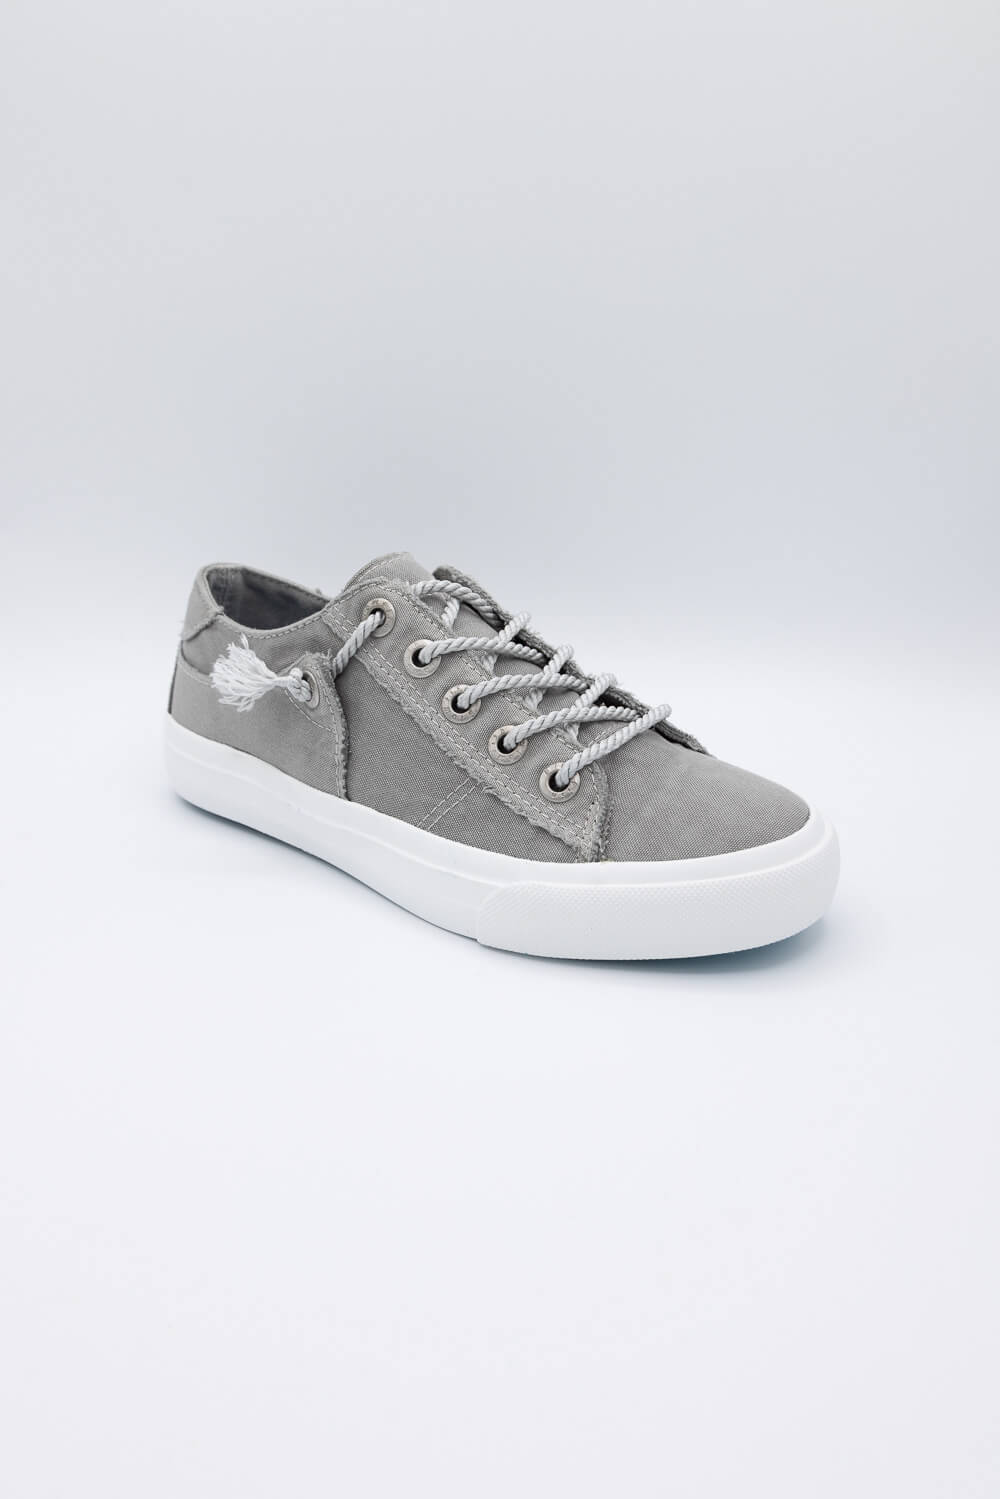 Blowfish Malibu Martina Sneakers for Women in Grey